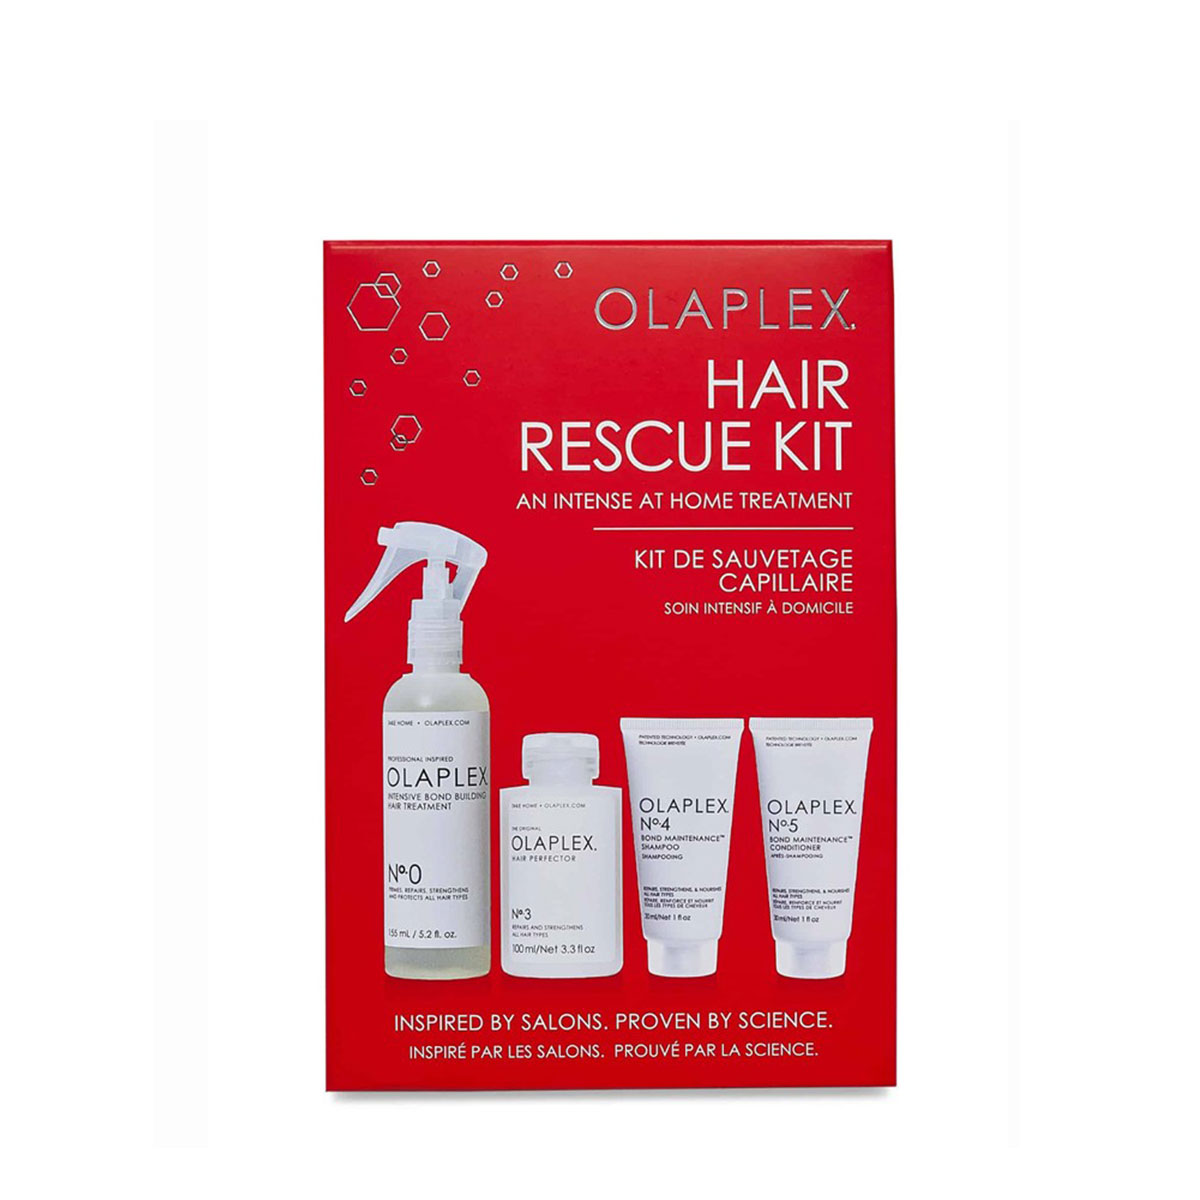 Buy Olaplex Hair Rescue Kit Online in Dubai & the UAE